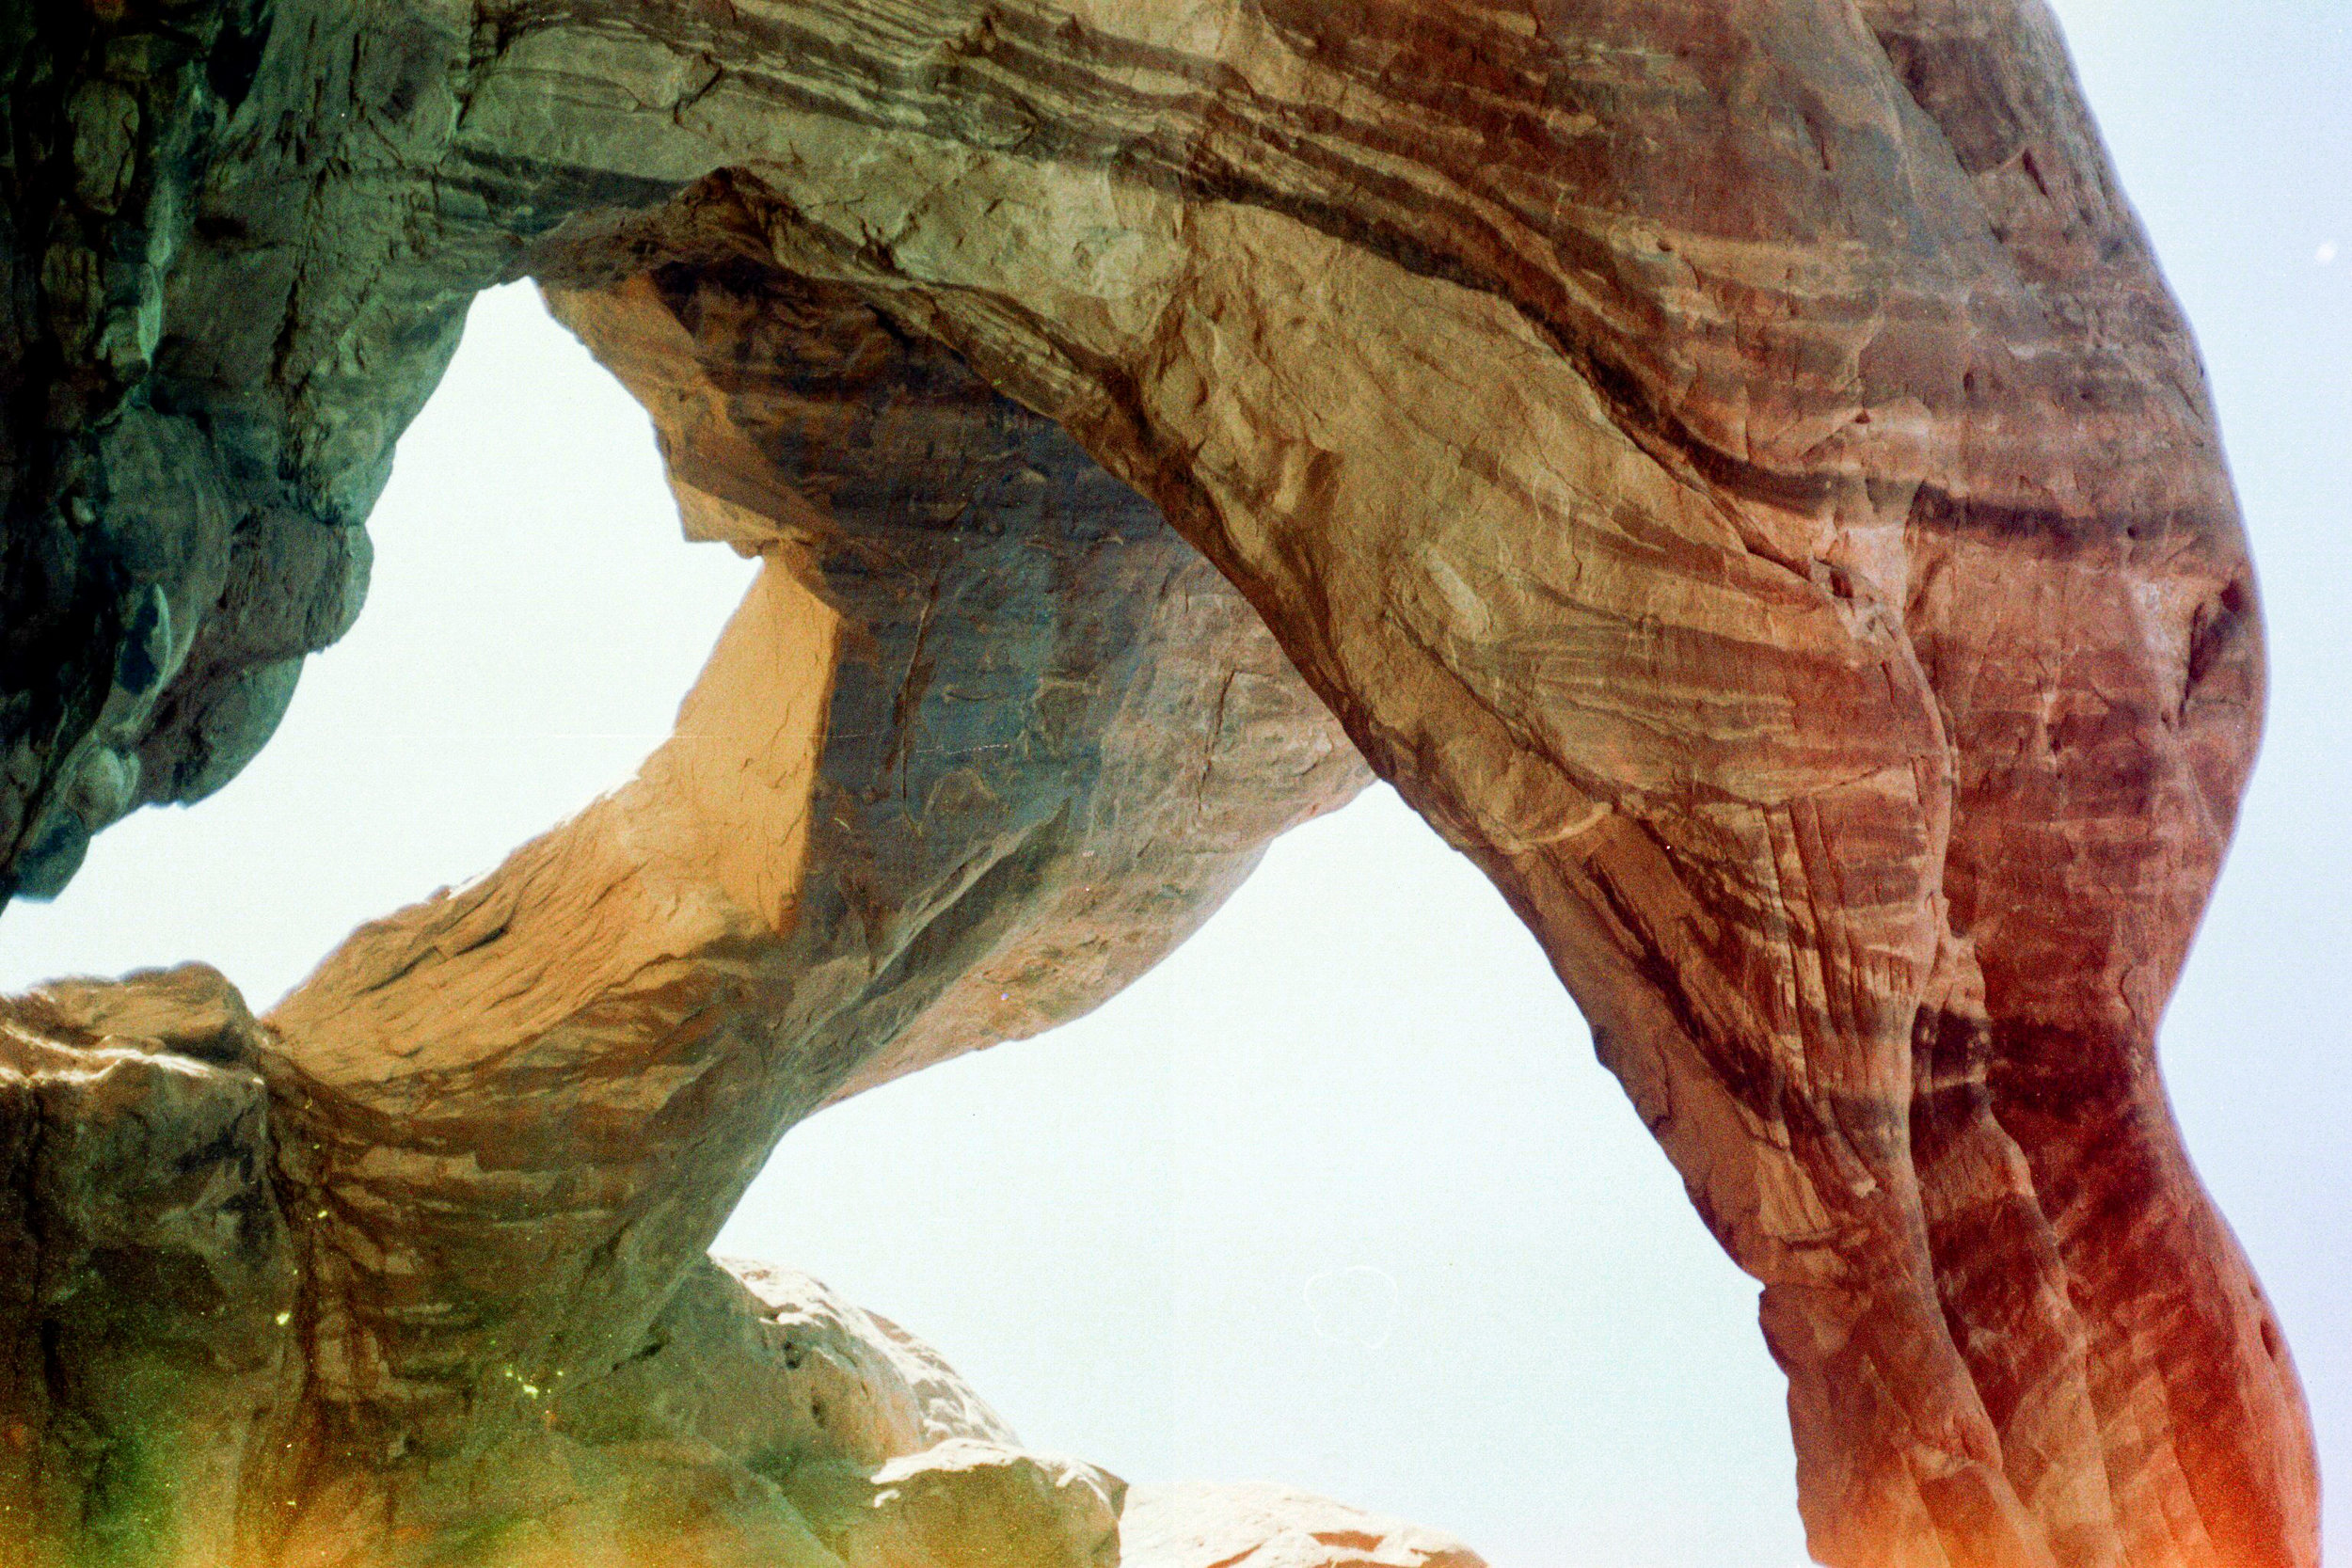  Arches National Park, Utah  35mm film 